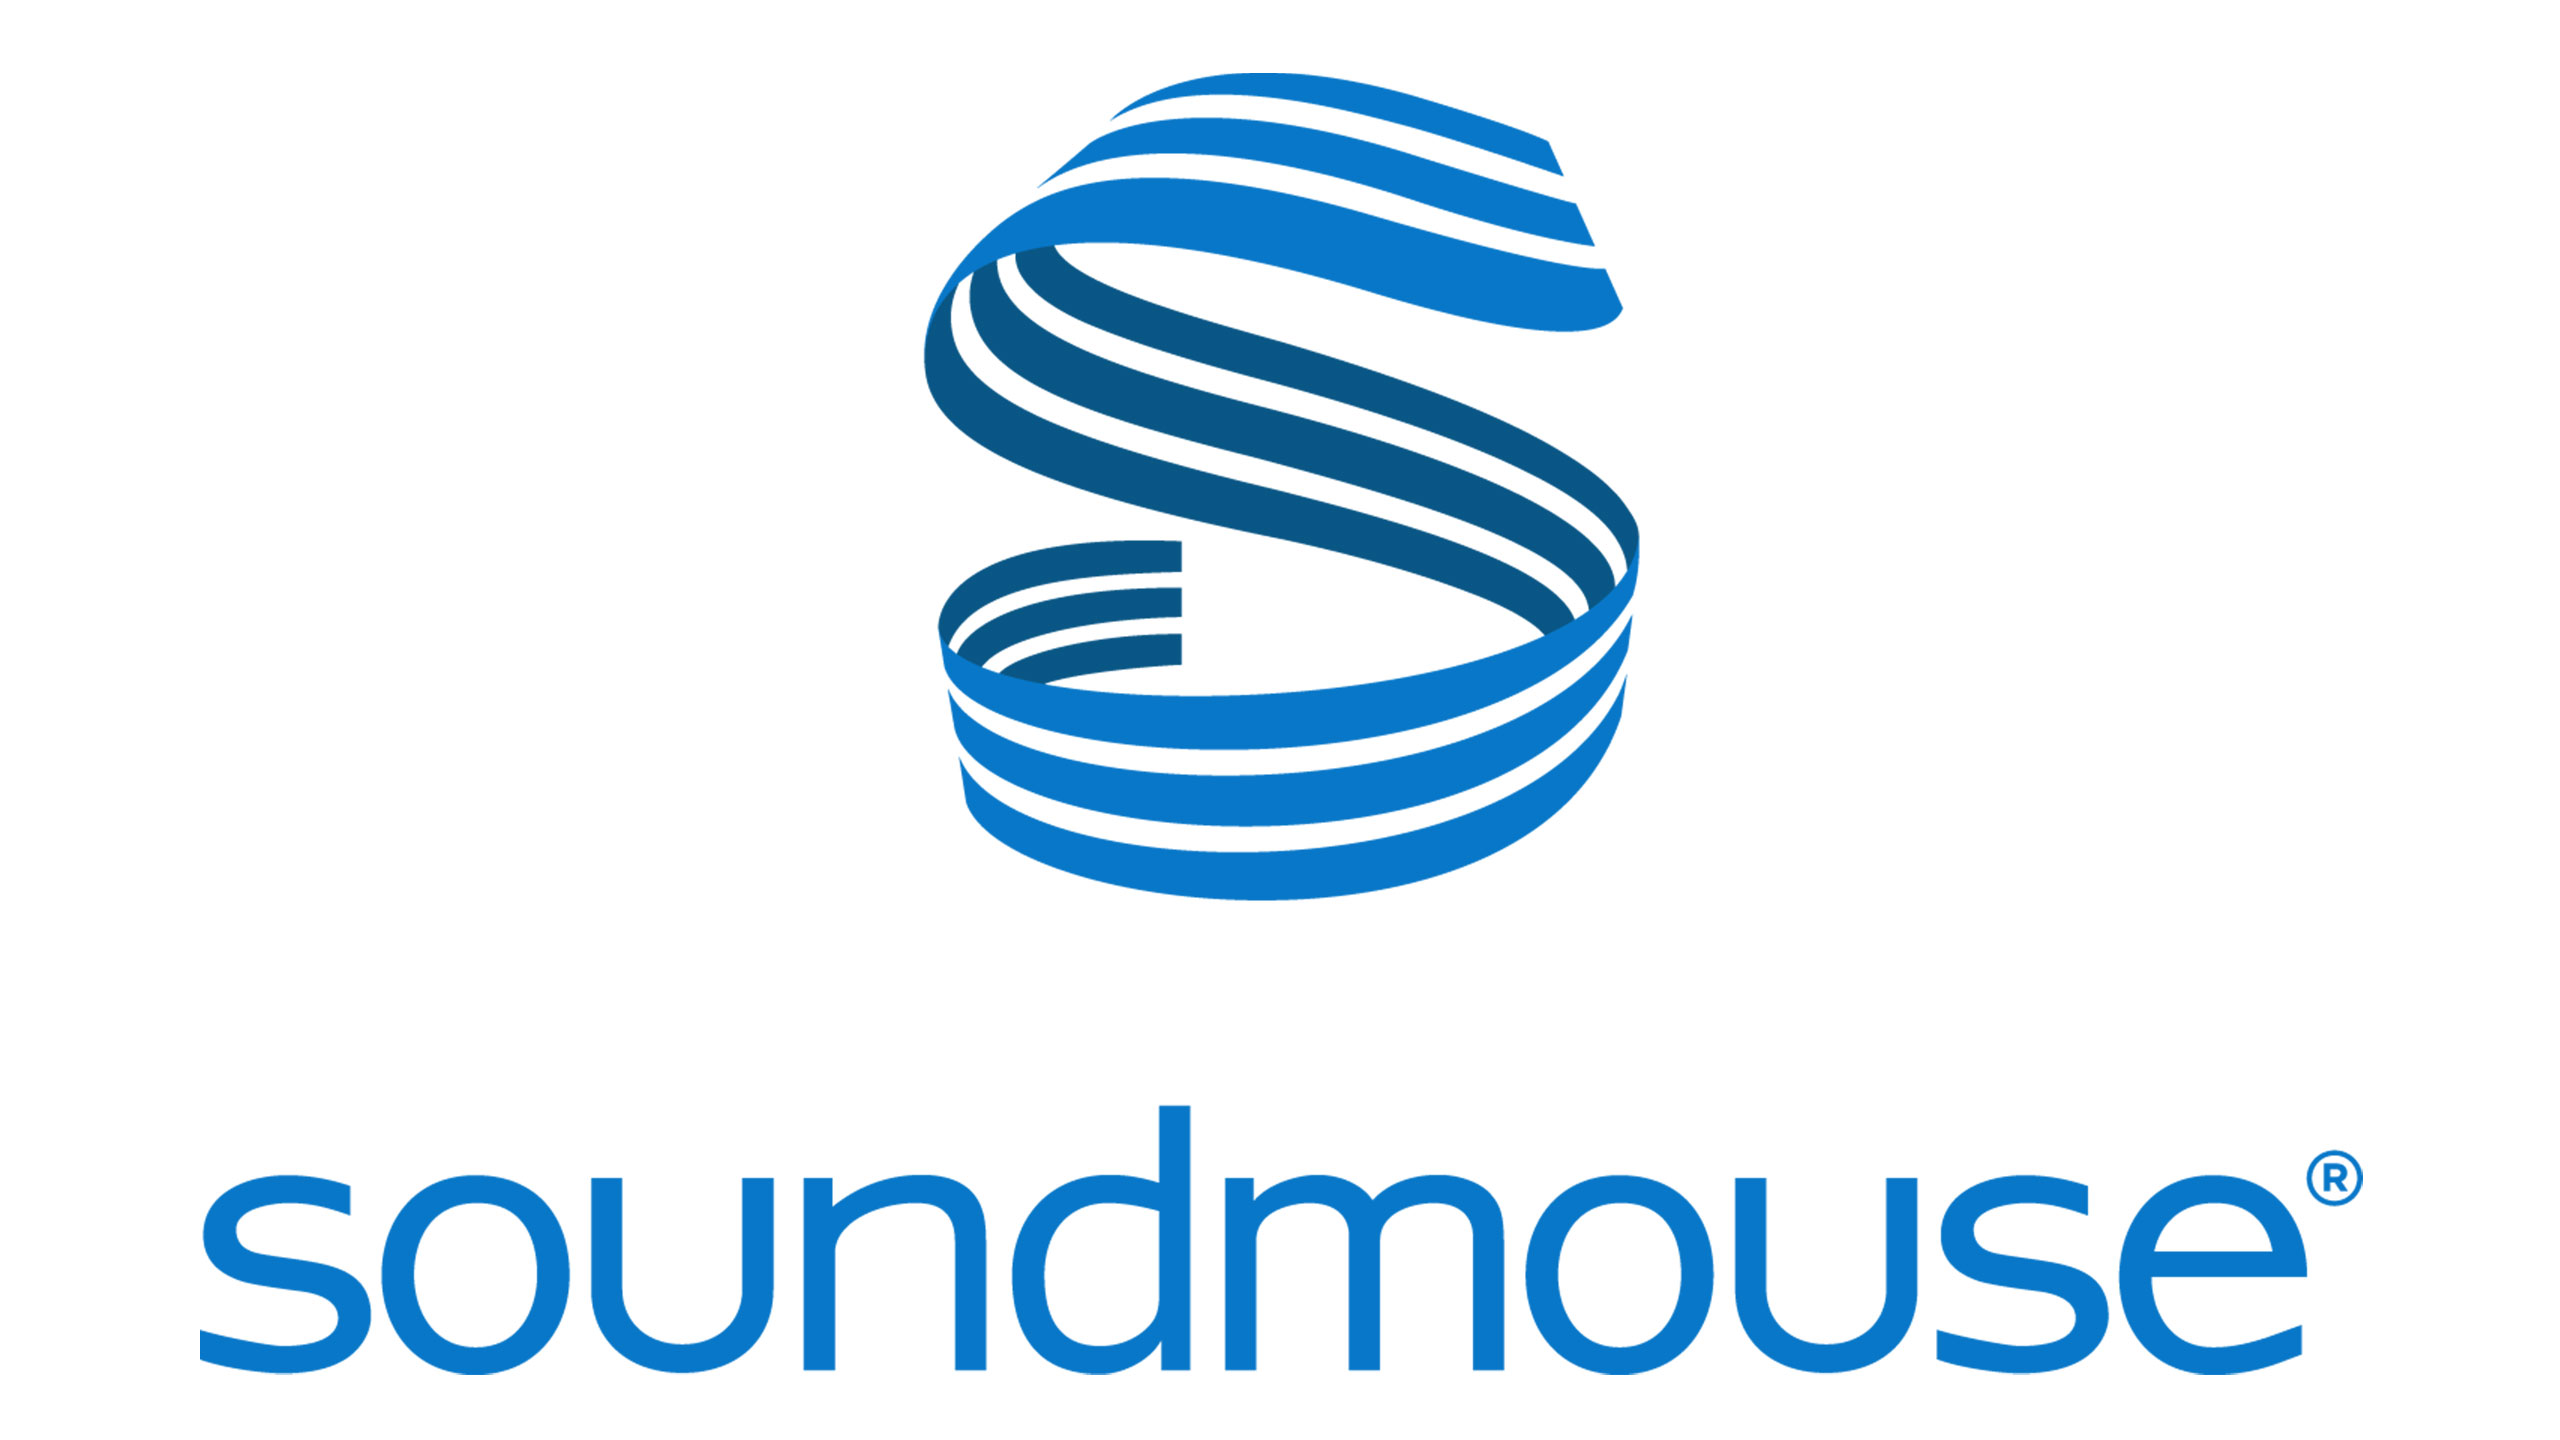 Soundmouse logo